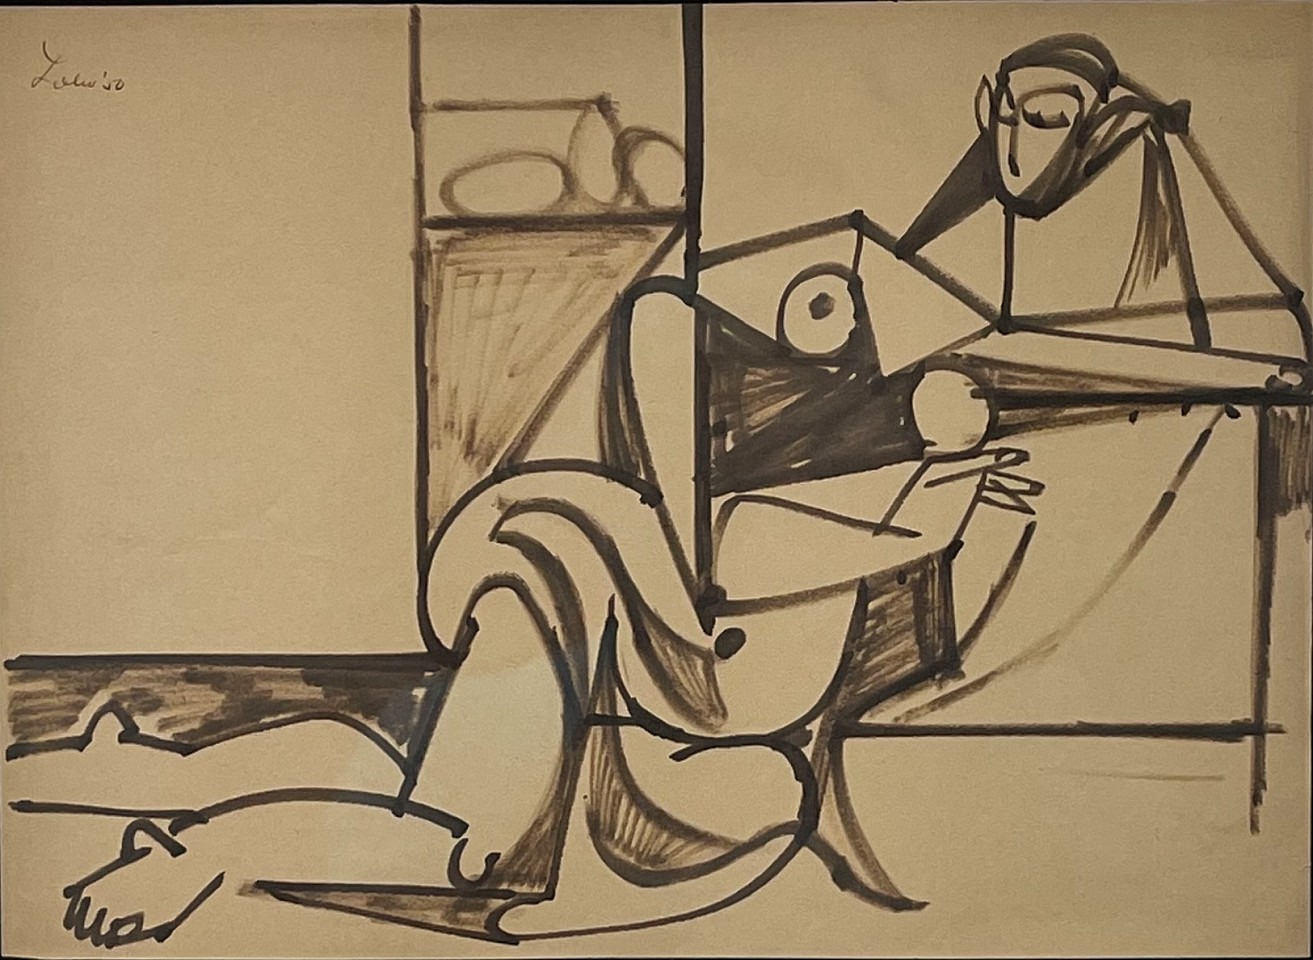 Michael Loew, Nude No. 22, 1950
India Ink on Paper, 9 x 12 1/2 in.
LOE005